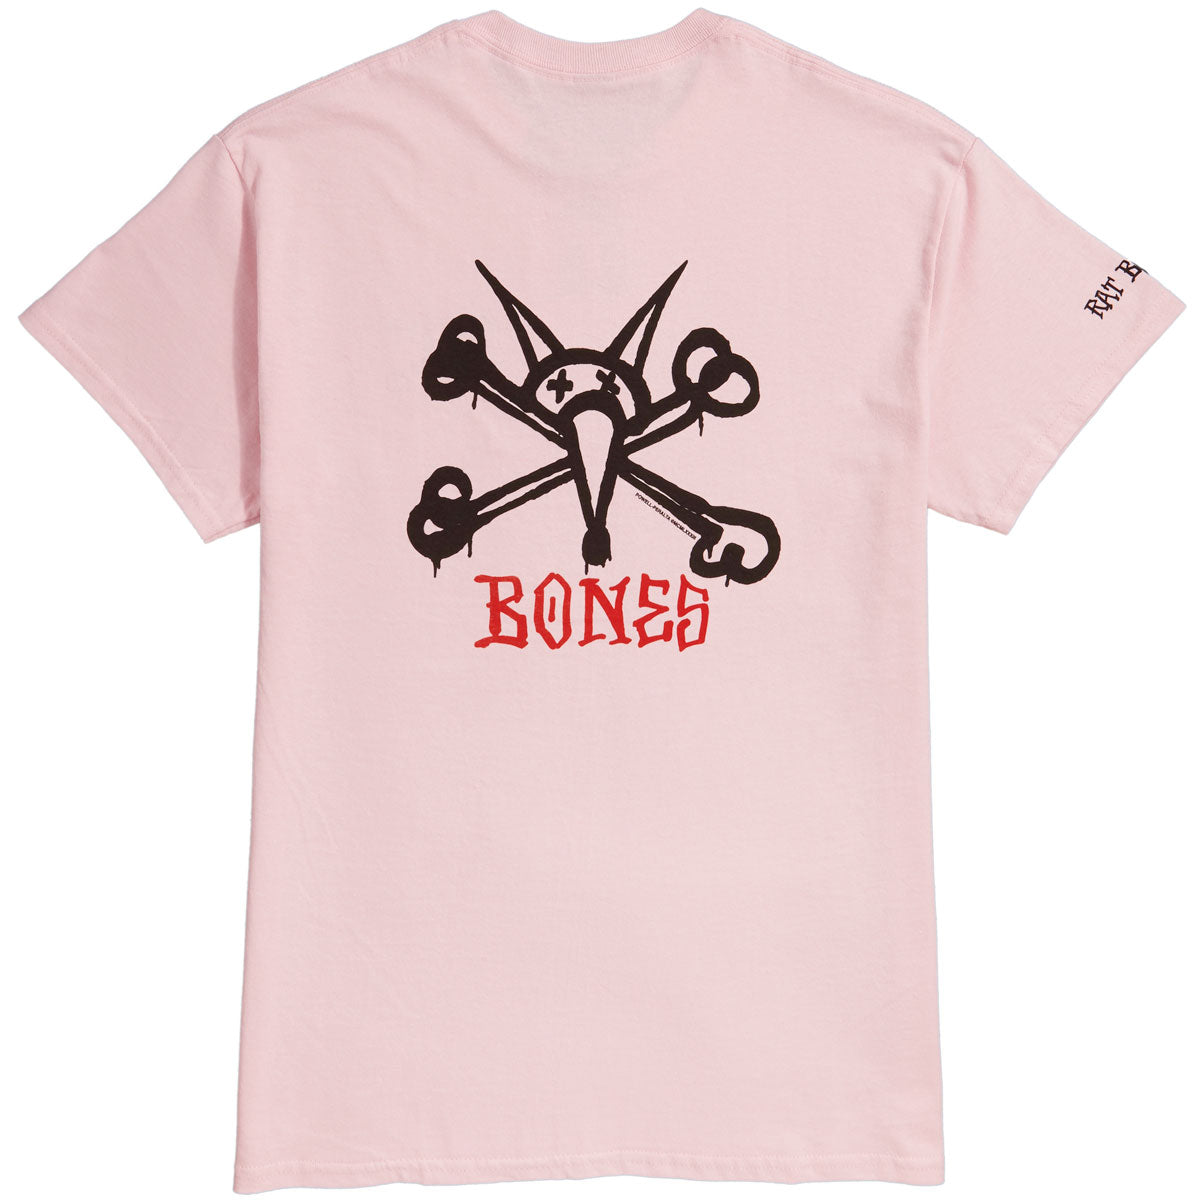 Powell-Peralta Rat Bones T-Shirt - Light Pink image 1